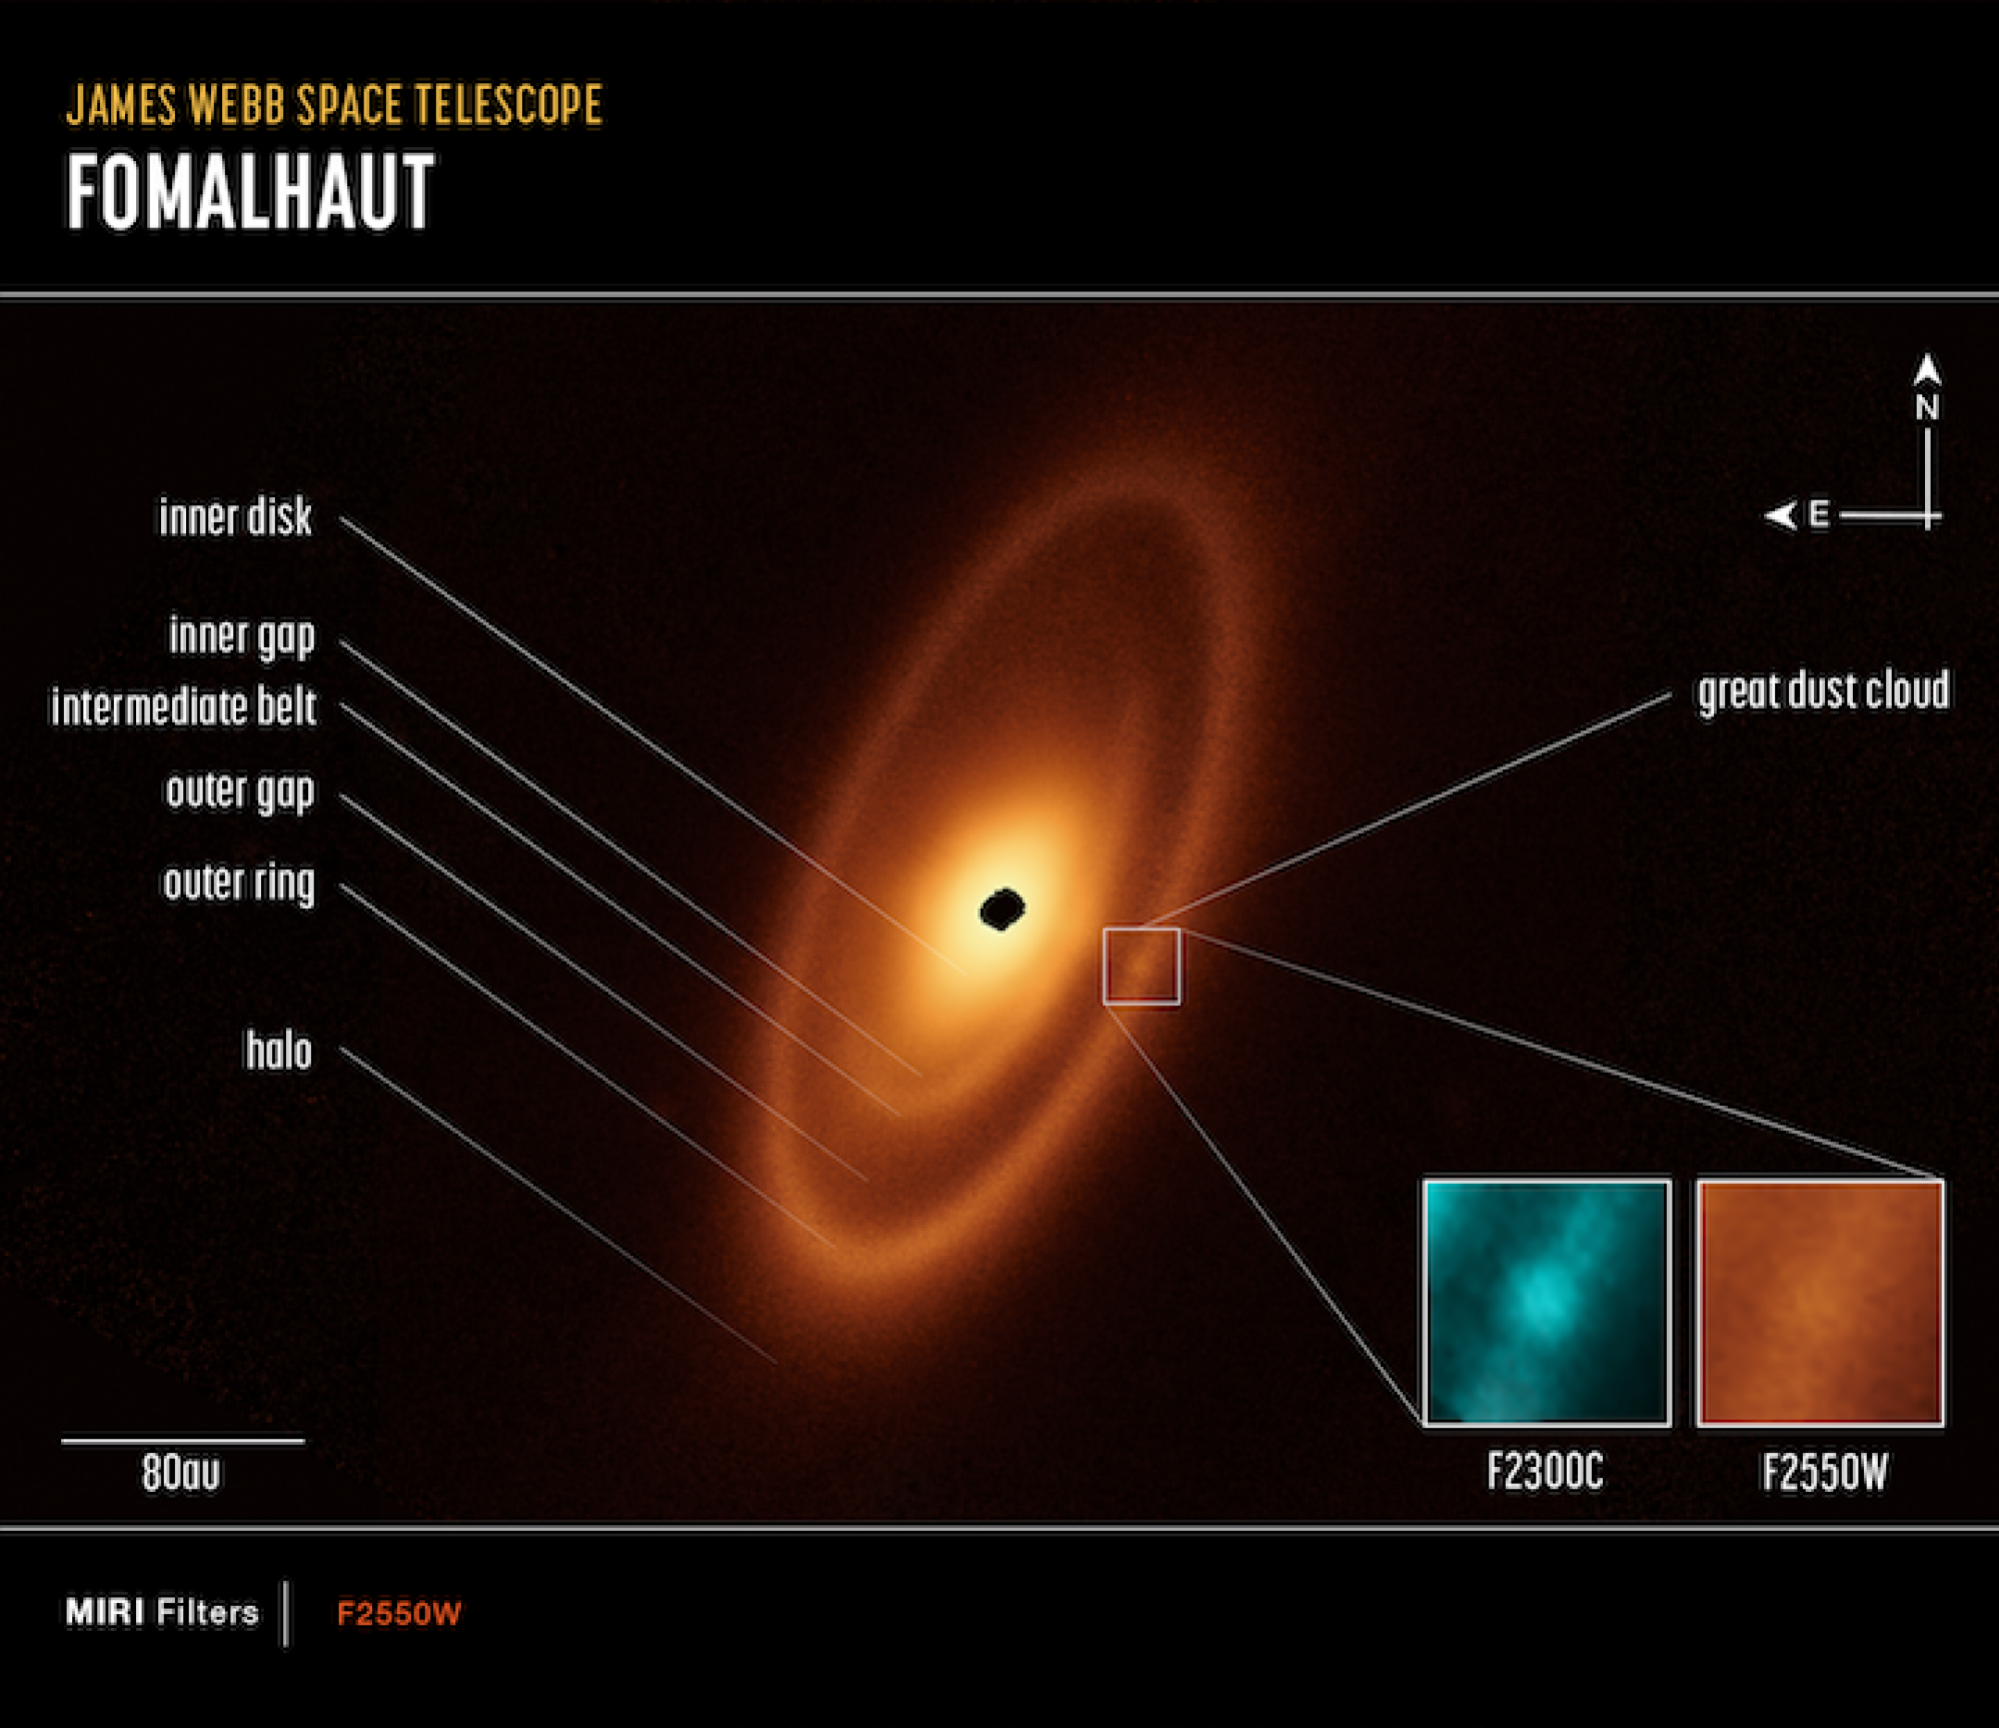 The James Webb Space Telescope captured three rings around the star Fomalhaut.